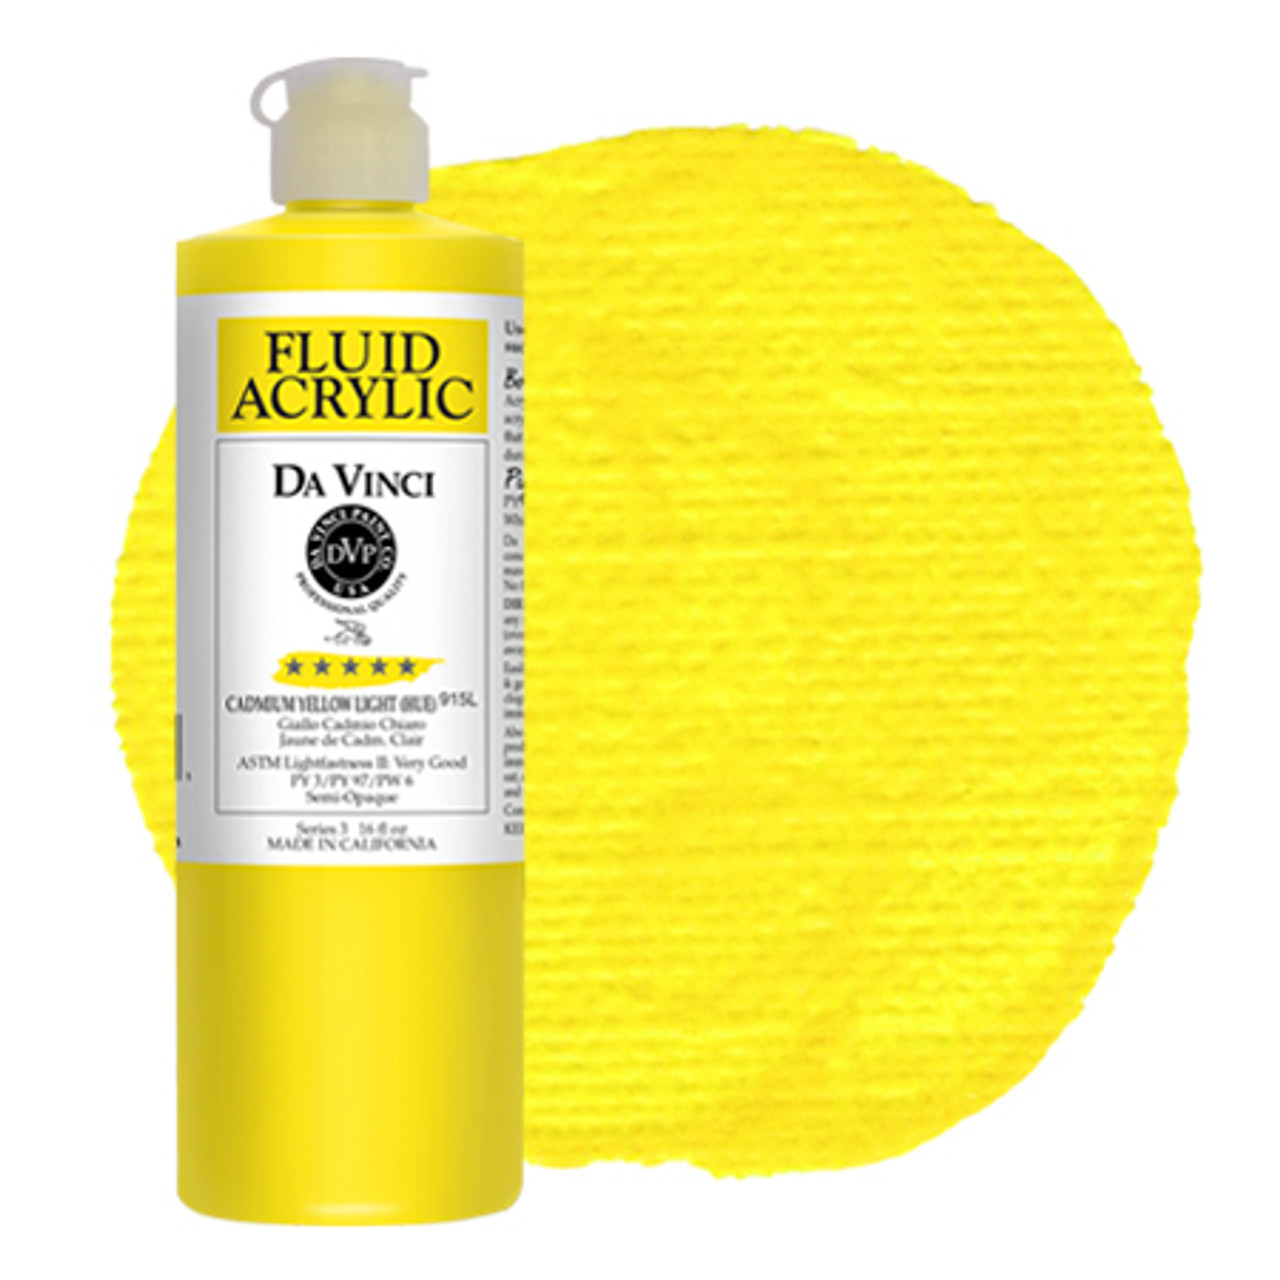 Cadmium Yellow Light (Hue) (16oz Fluid Acrylic)